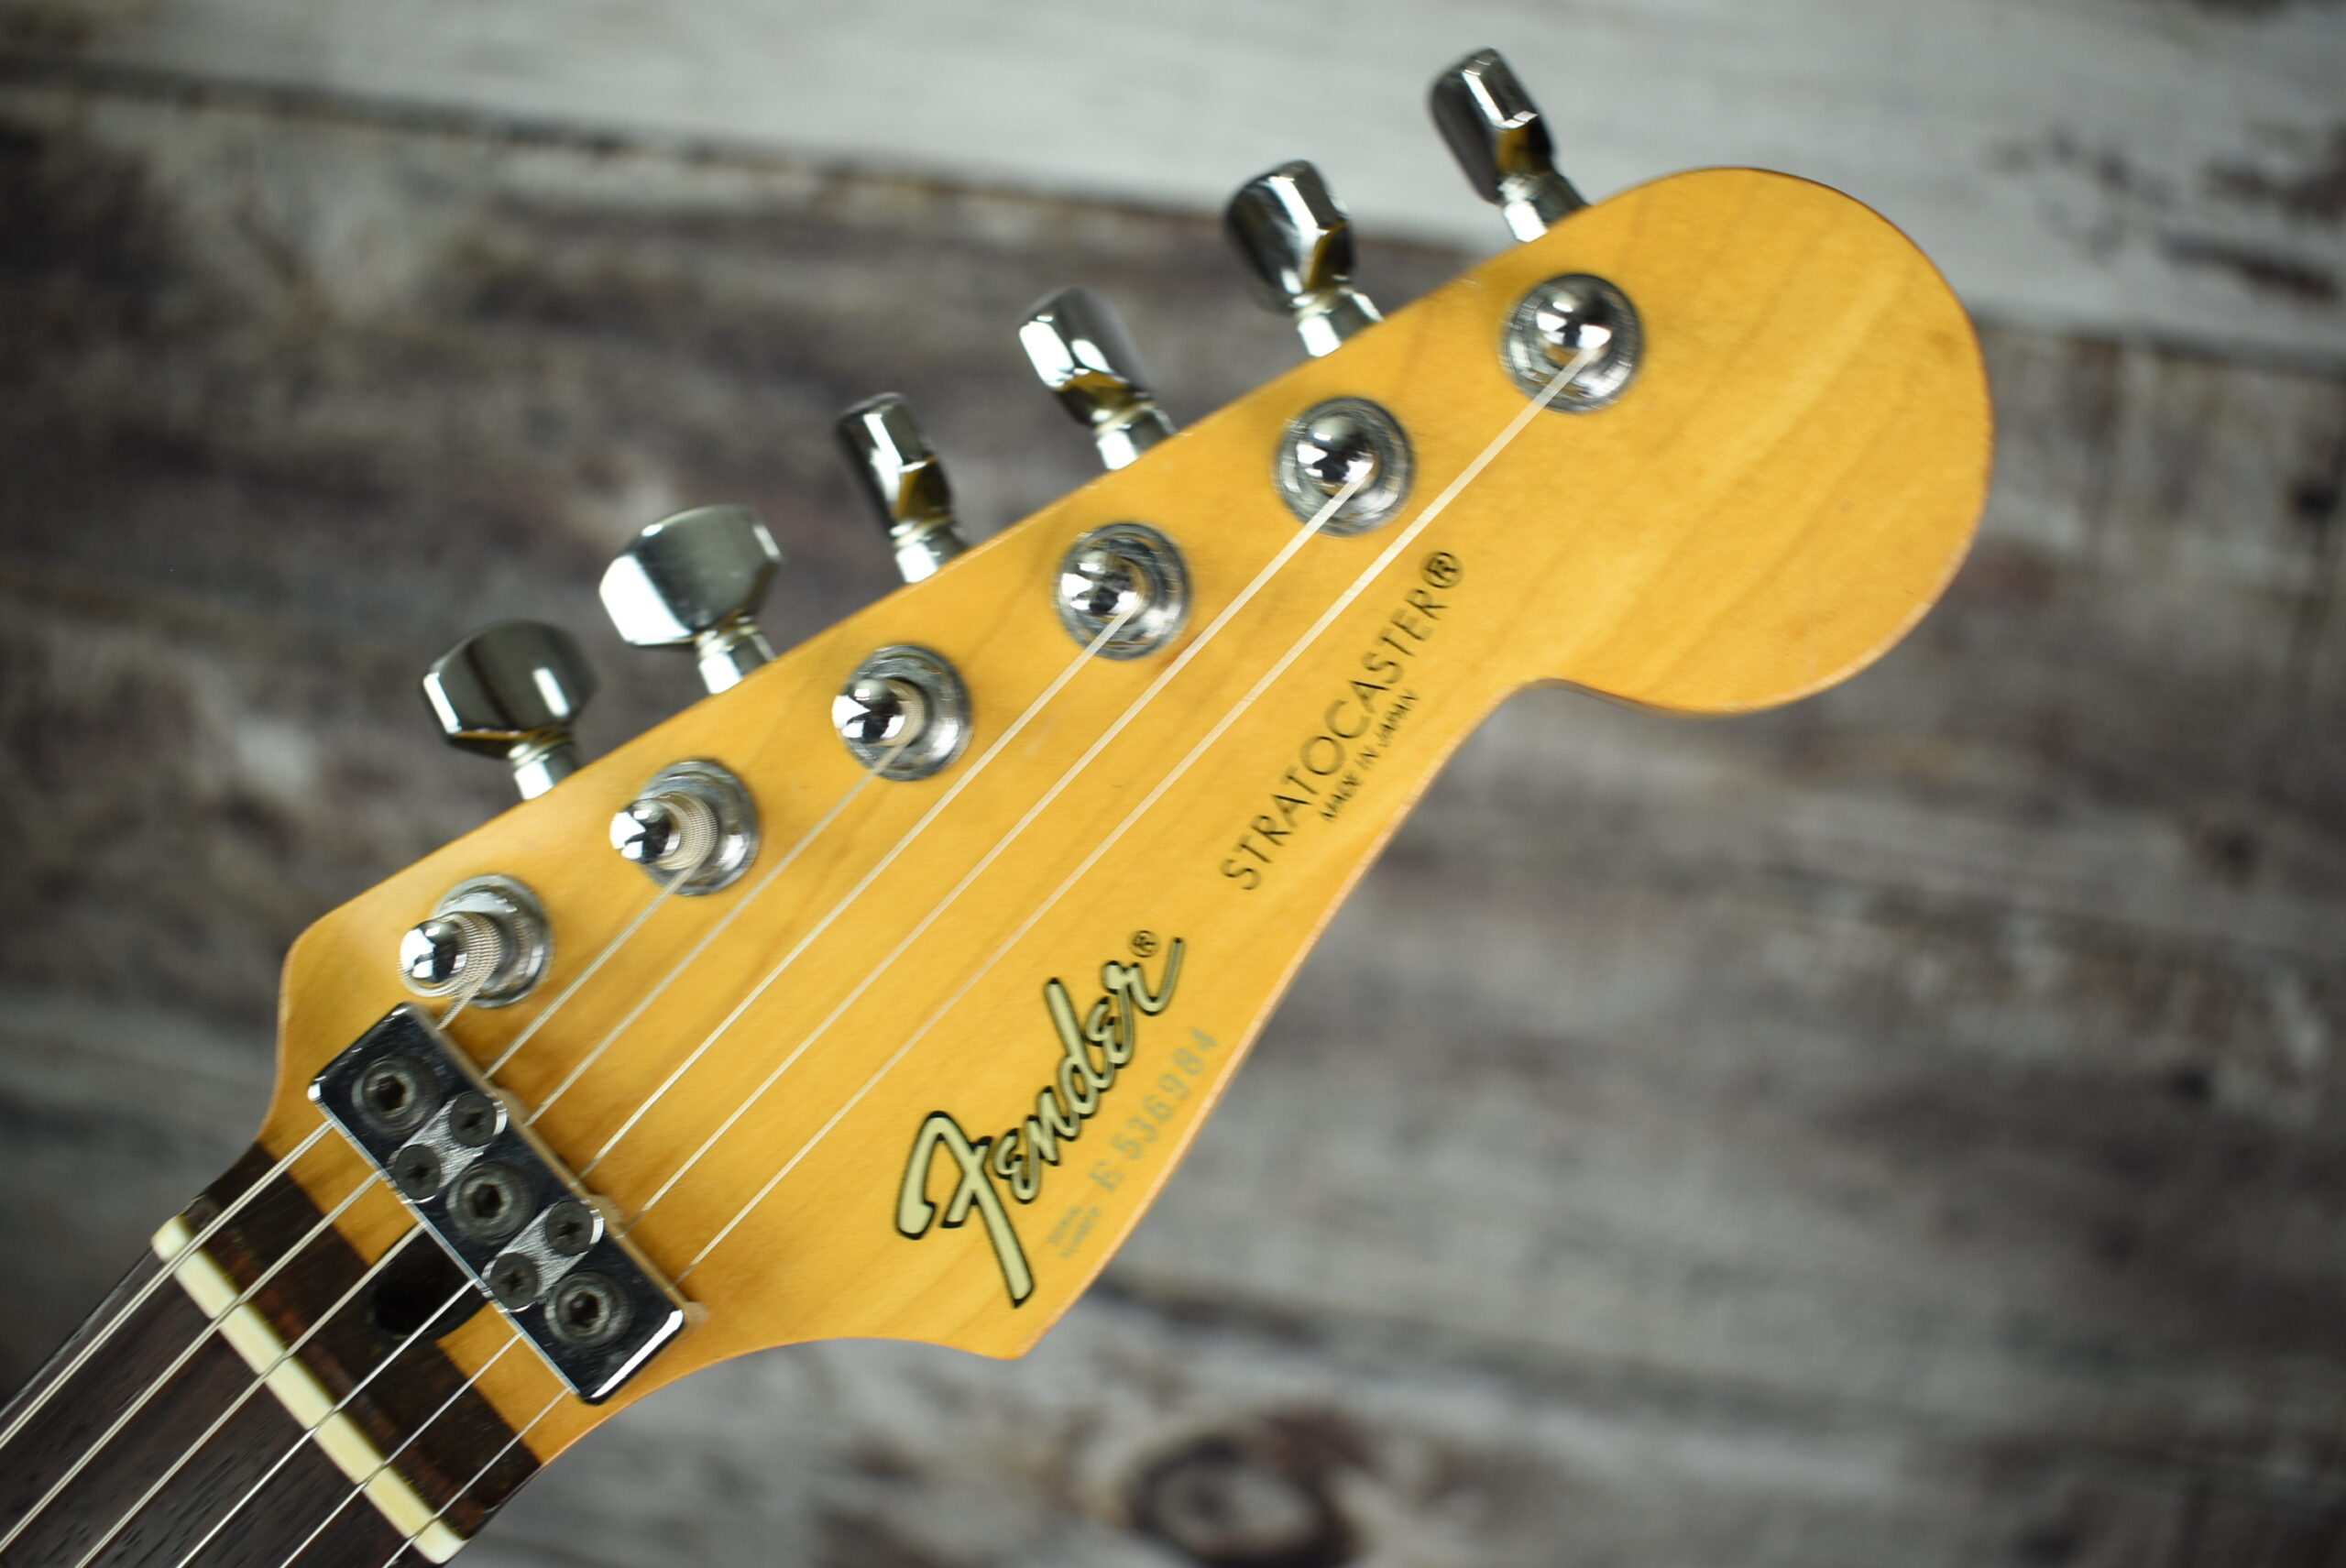 https://theloftatlays.com/wp-content/uploads/2021/01/1985-Fender-Stratocaster-MIJ-SKU-174-9-scaled.jpg